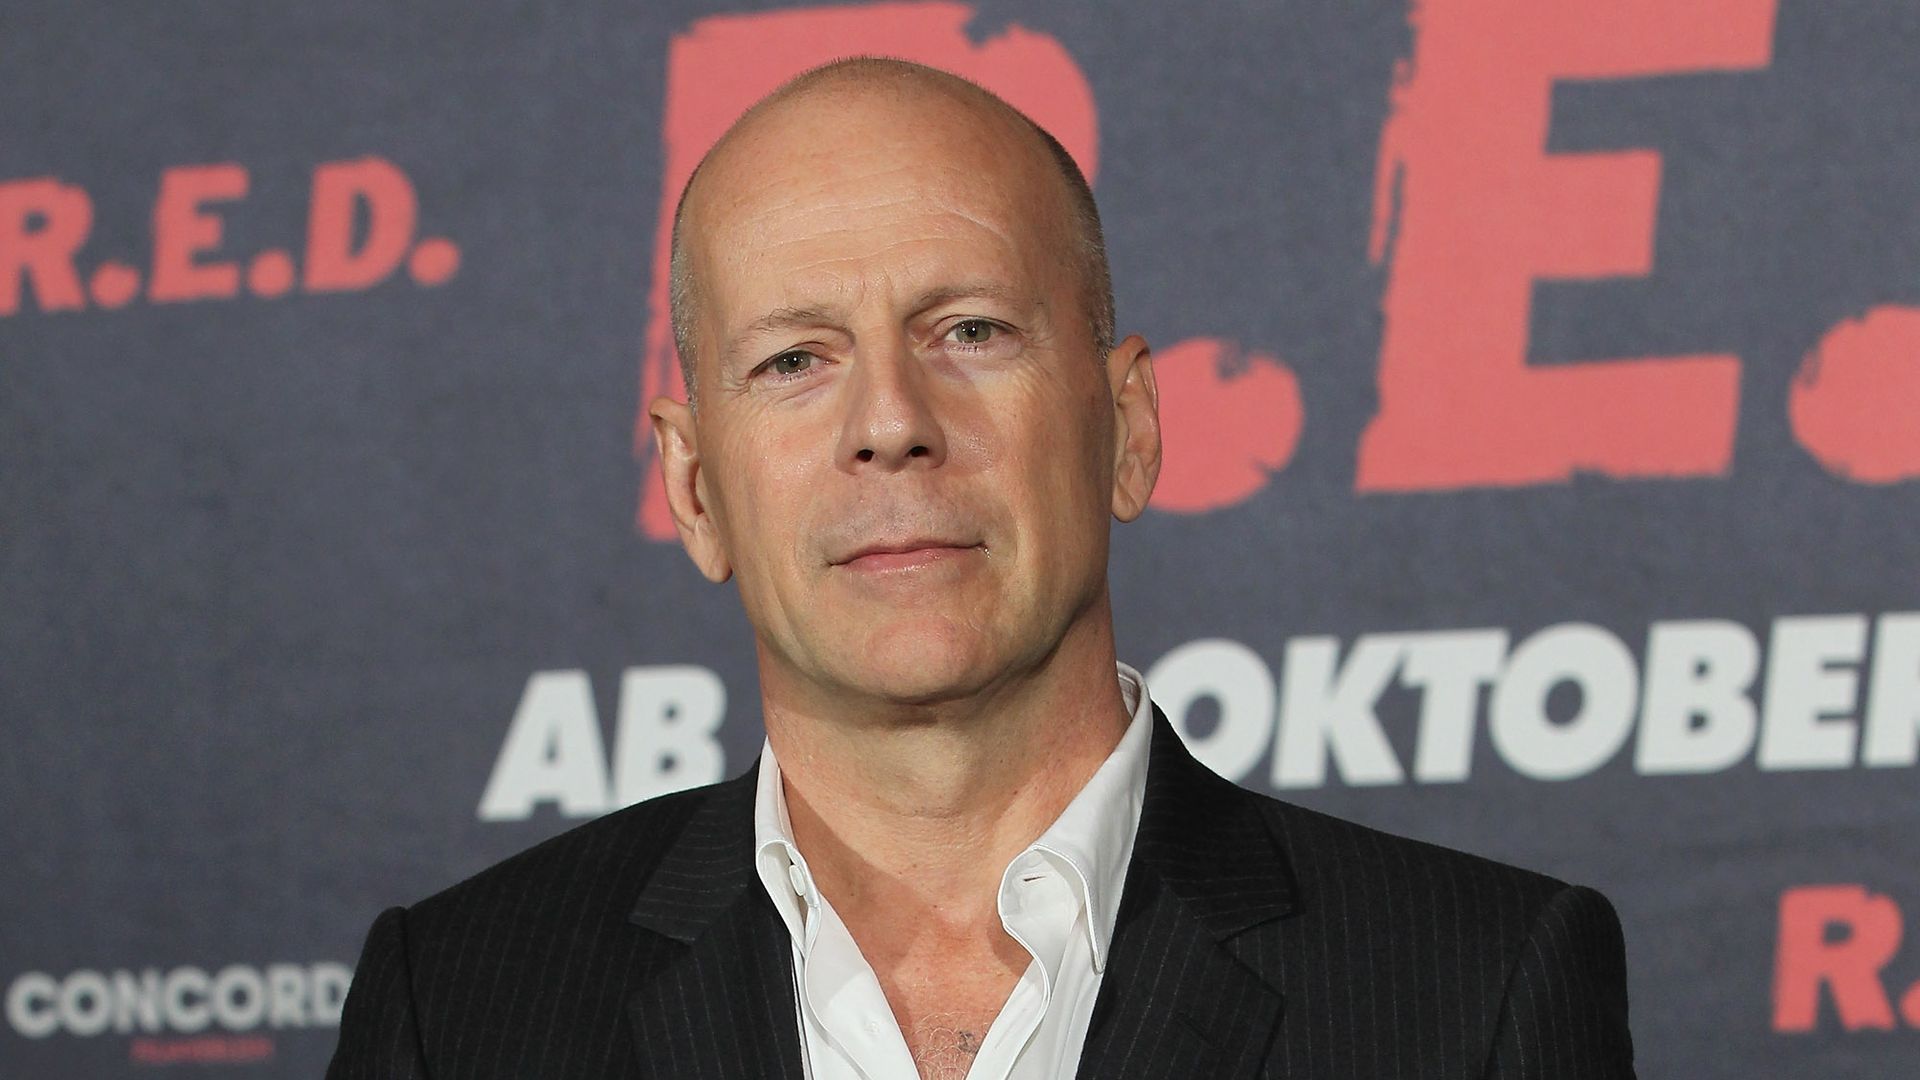 Bruce Willis is close friend reveals in